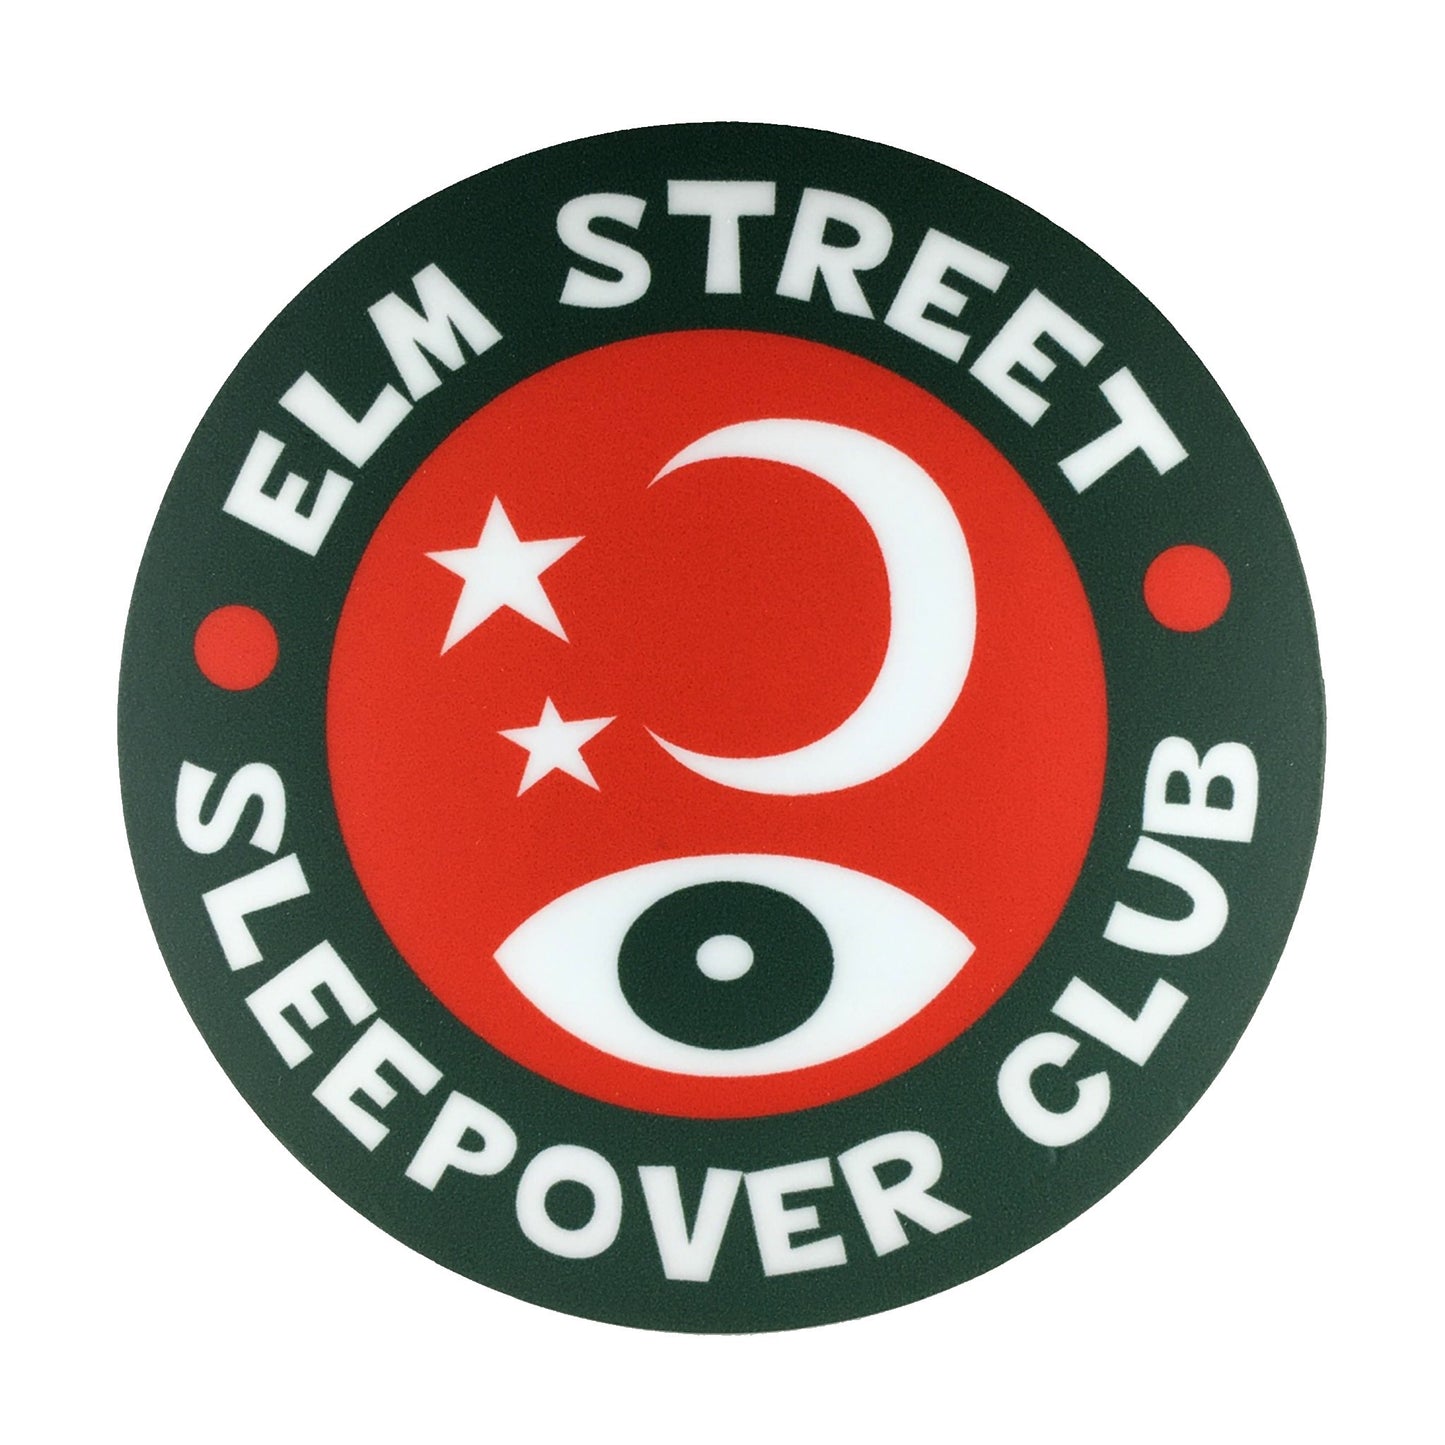 Elm Street Sleepover Club circle sticker